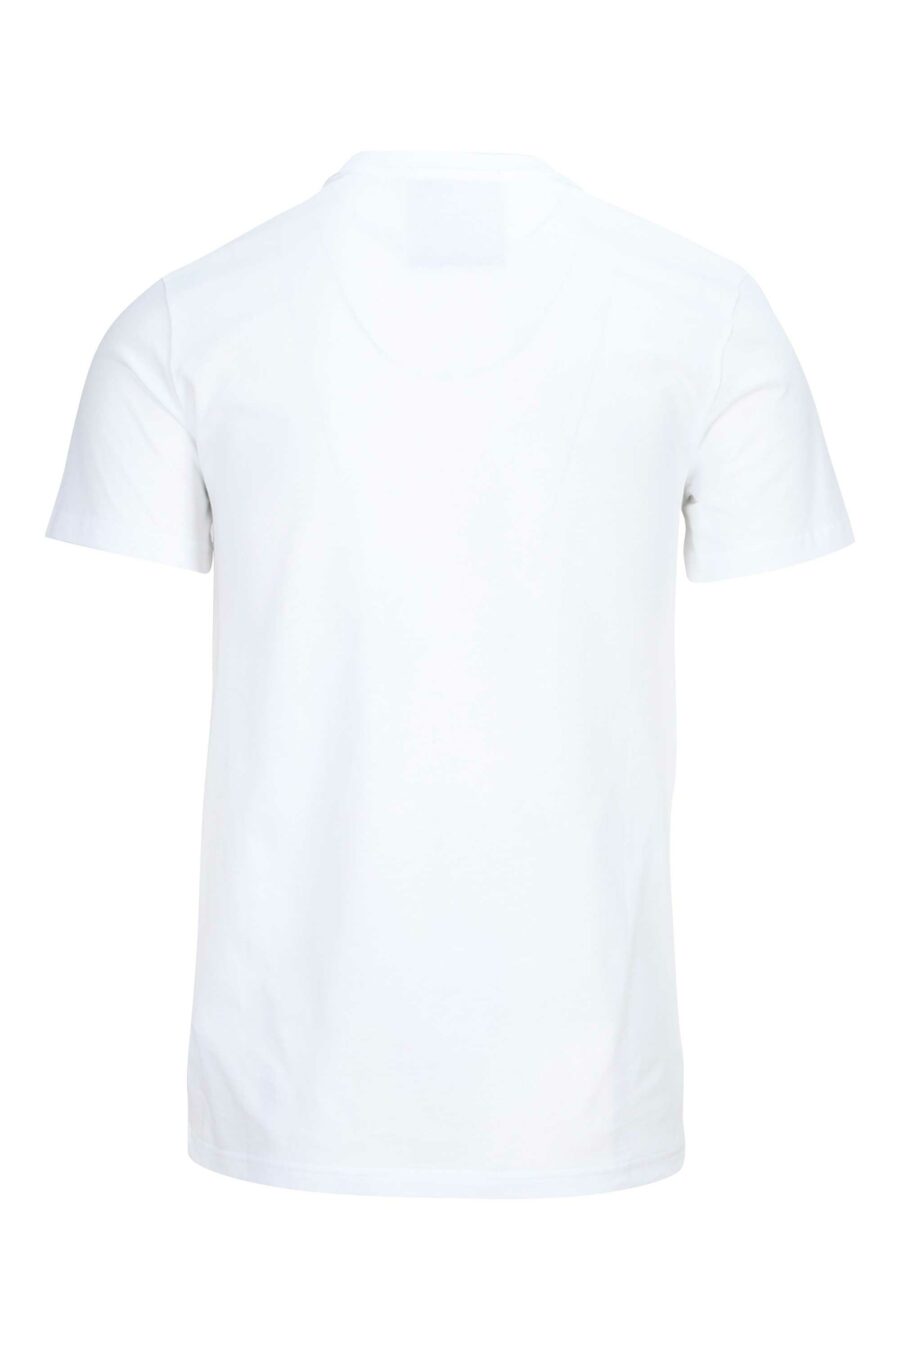 T-shirt blanc en coton bio avec maxilogue noir - 889316649031 1